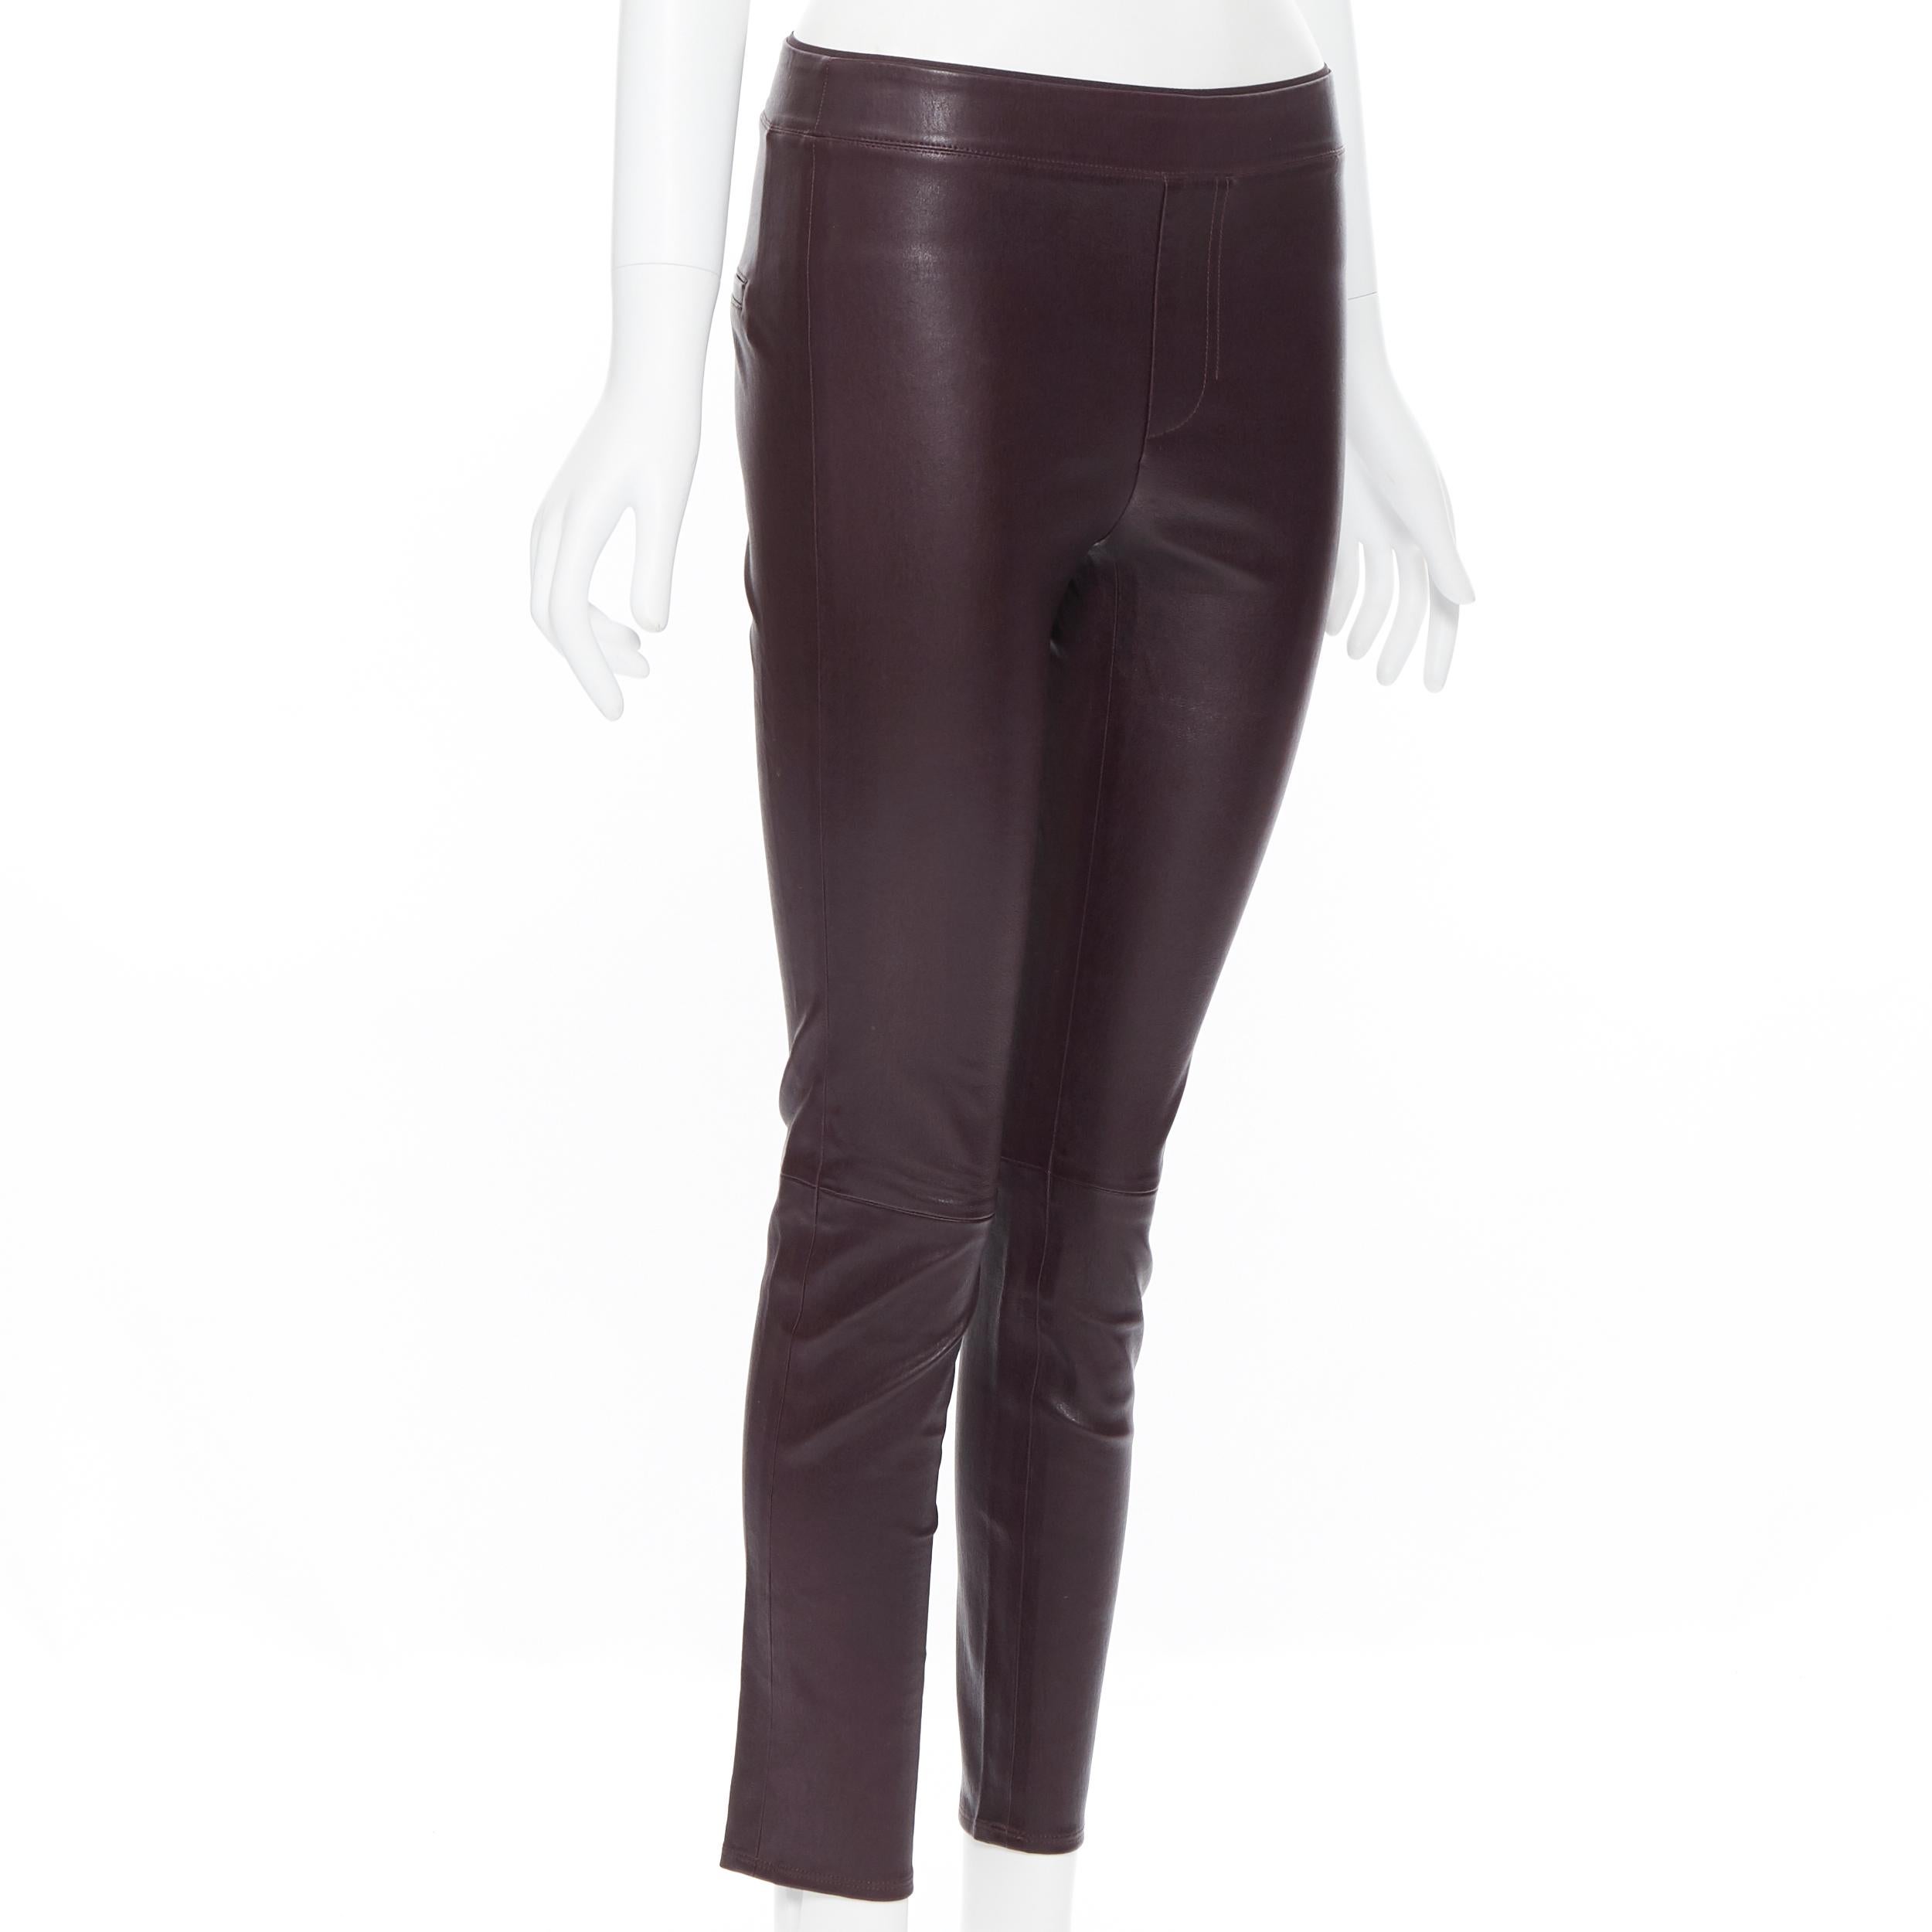 Black HELMUT LANG 100% leather dark burgundy minimal stretchy skinny leg pants XS